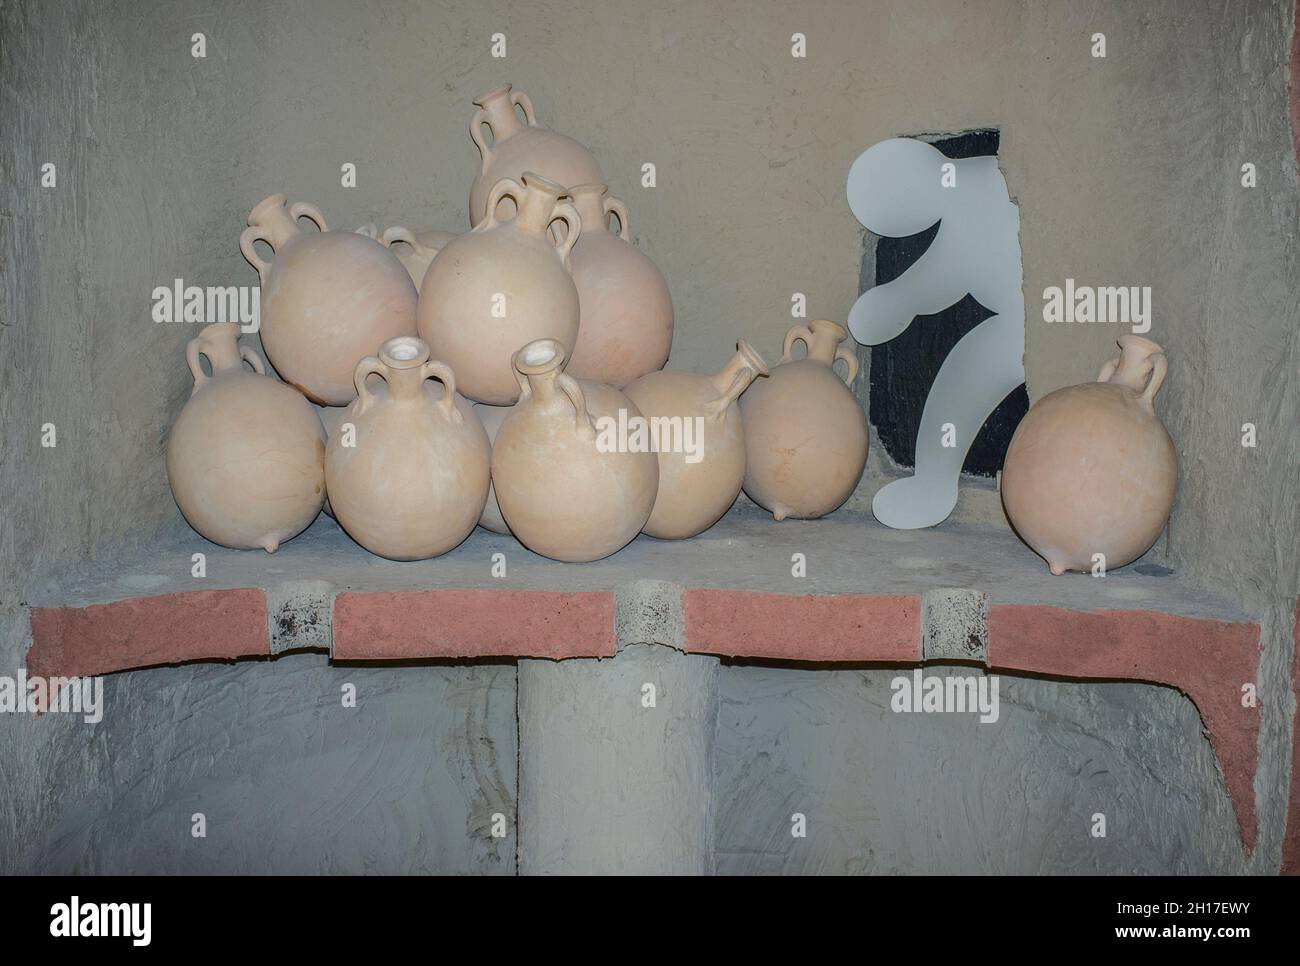 Ecija, Spain - April 21th, 2019: Olearia amphorae oven indoor or Kiln. Ecija History Museum Stock Photo